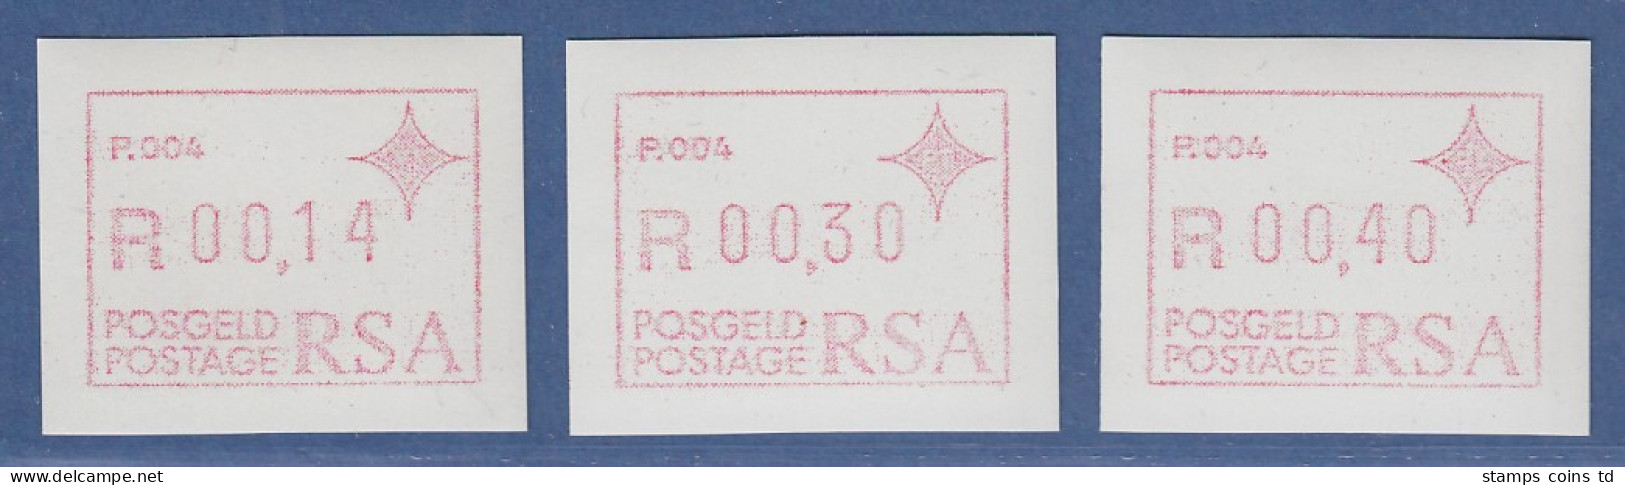 RSA Südafrika FRAMA-ATM  Aut.-Nr. P.004 Satz 14-30-40 ** (VS) - Automatenmarken (Frama)